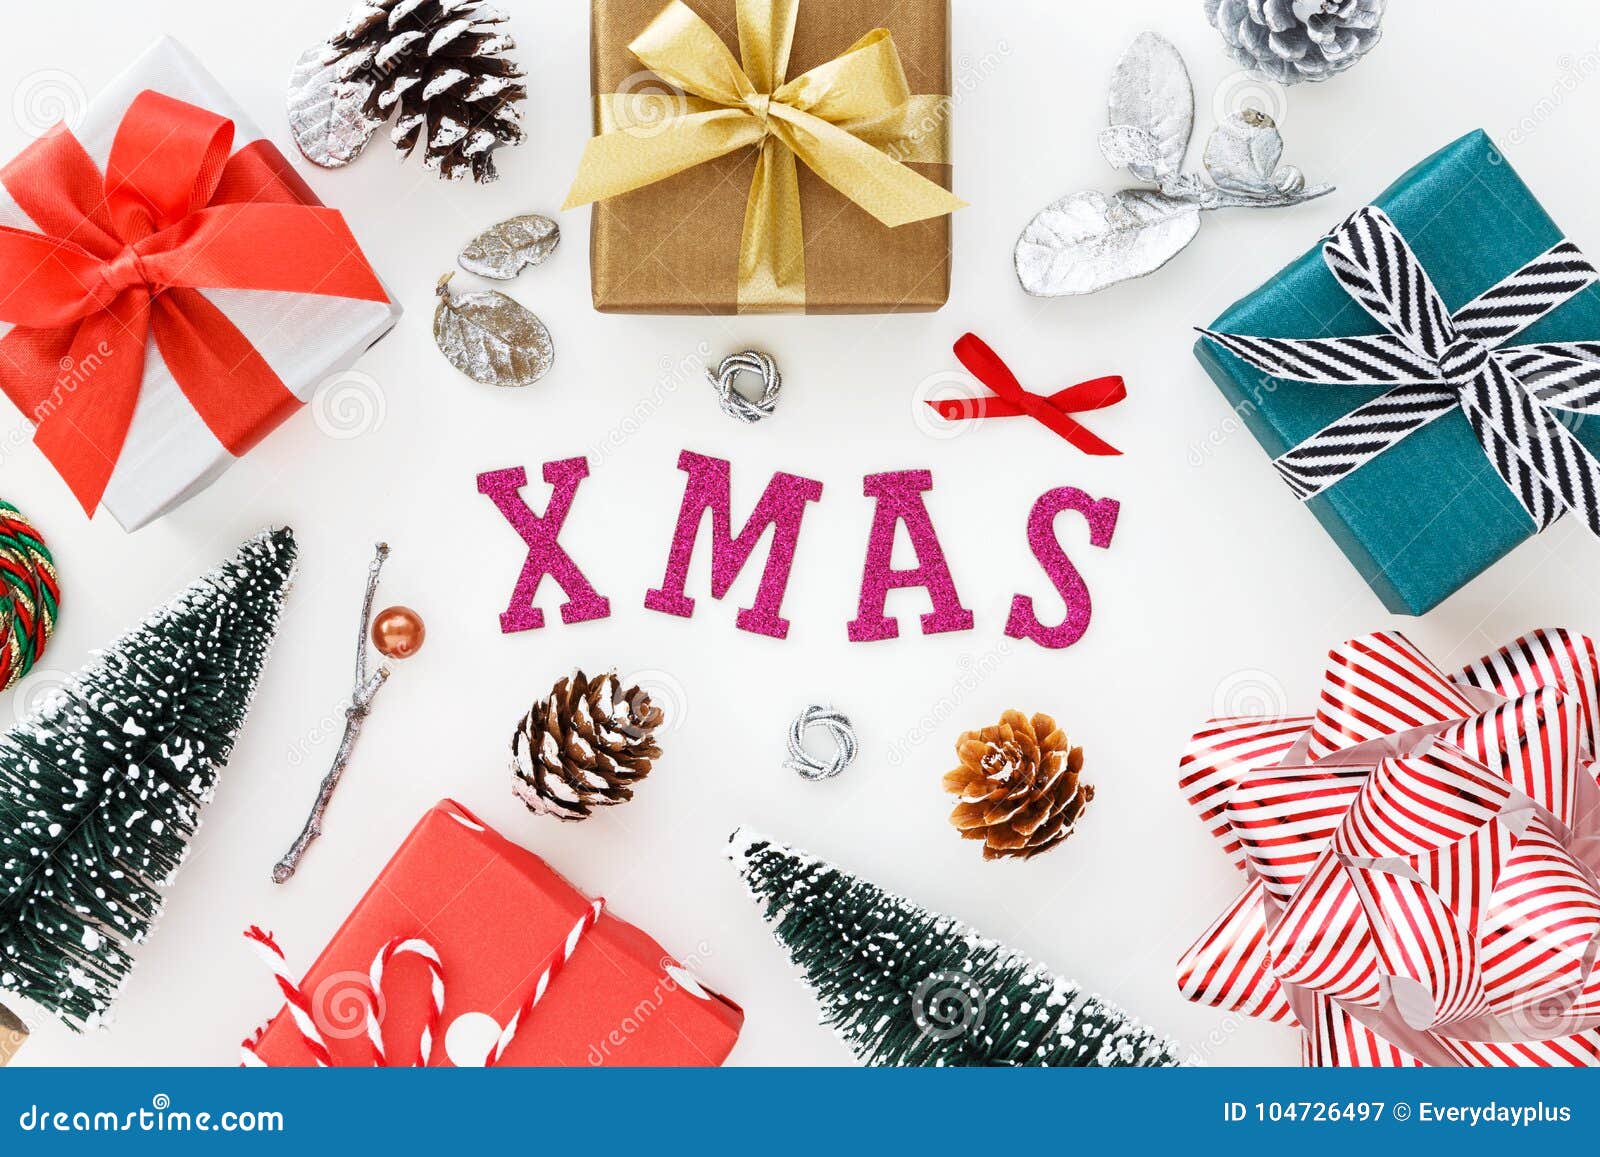 Christmas Decoration with Xmas Word Stock Image  Image of christmas